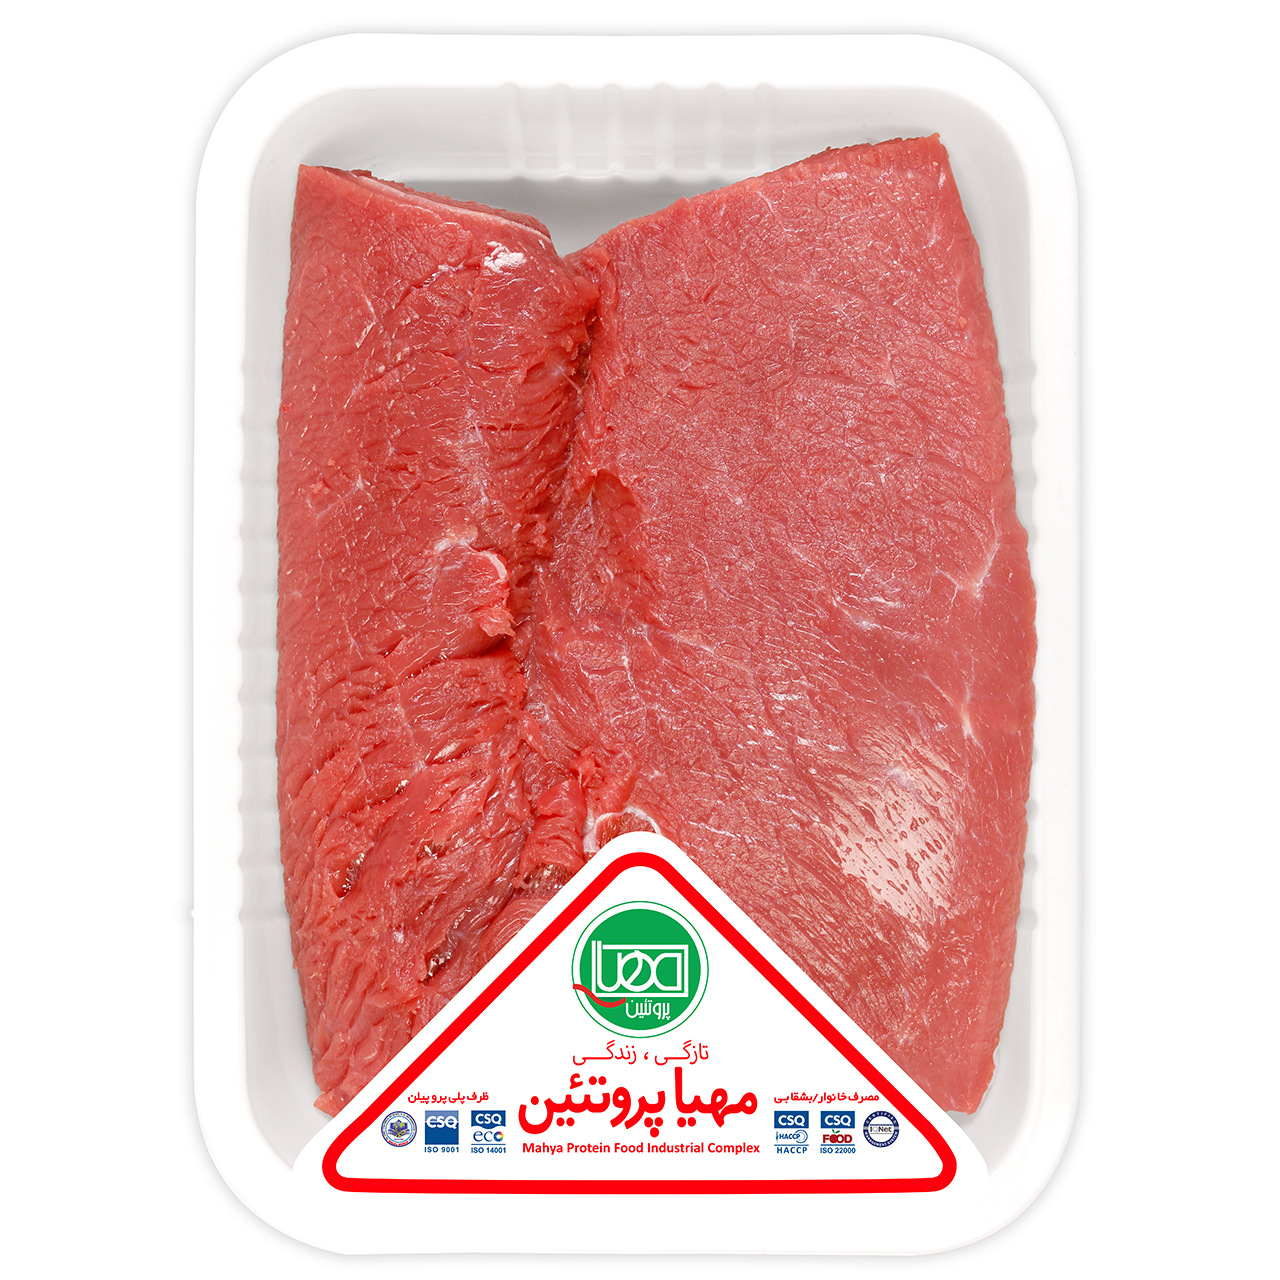 گوشت مخلوط گوساله مهیا پروتئین مقدار 1 کیلوگرم